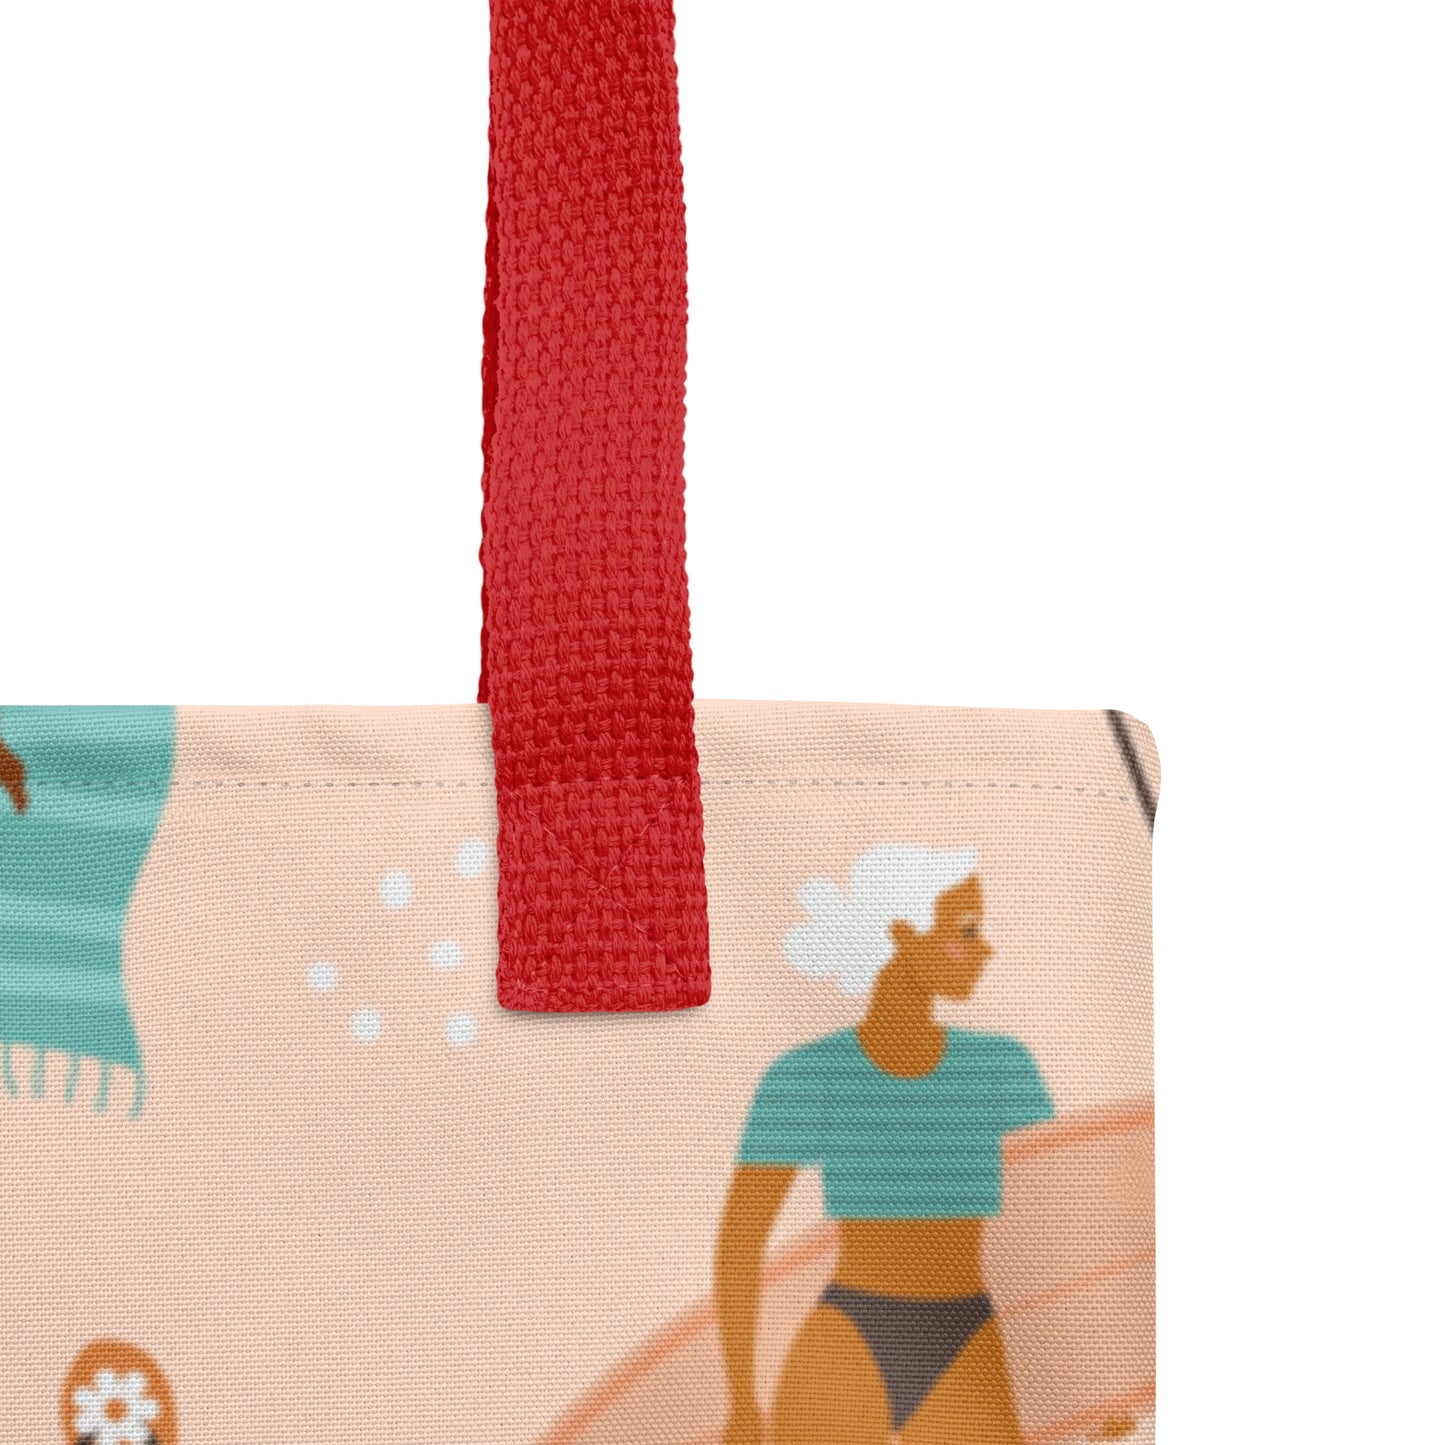 Tote Bag Women Designer (Beach Fun Time Pattern 001)